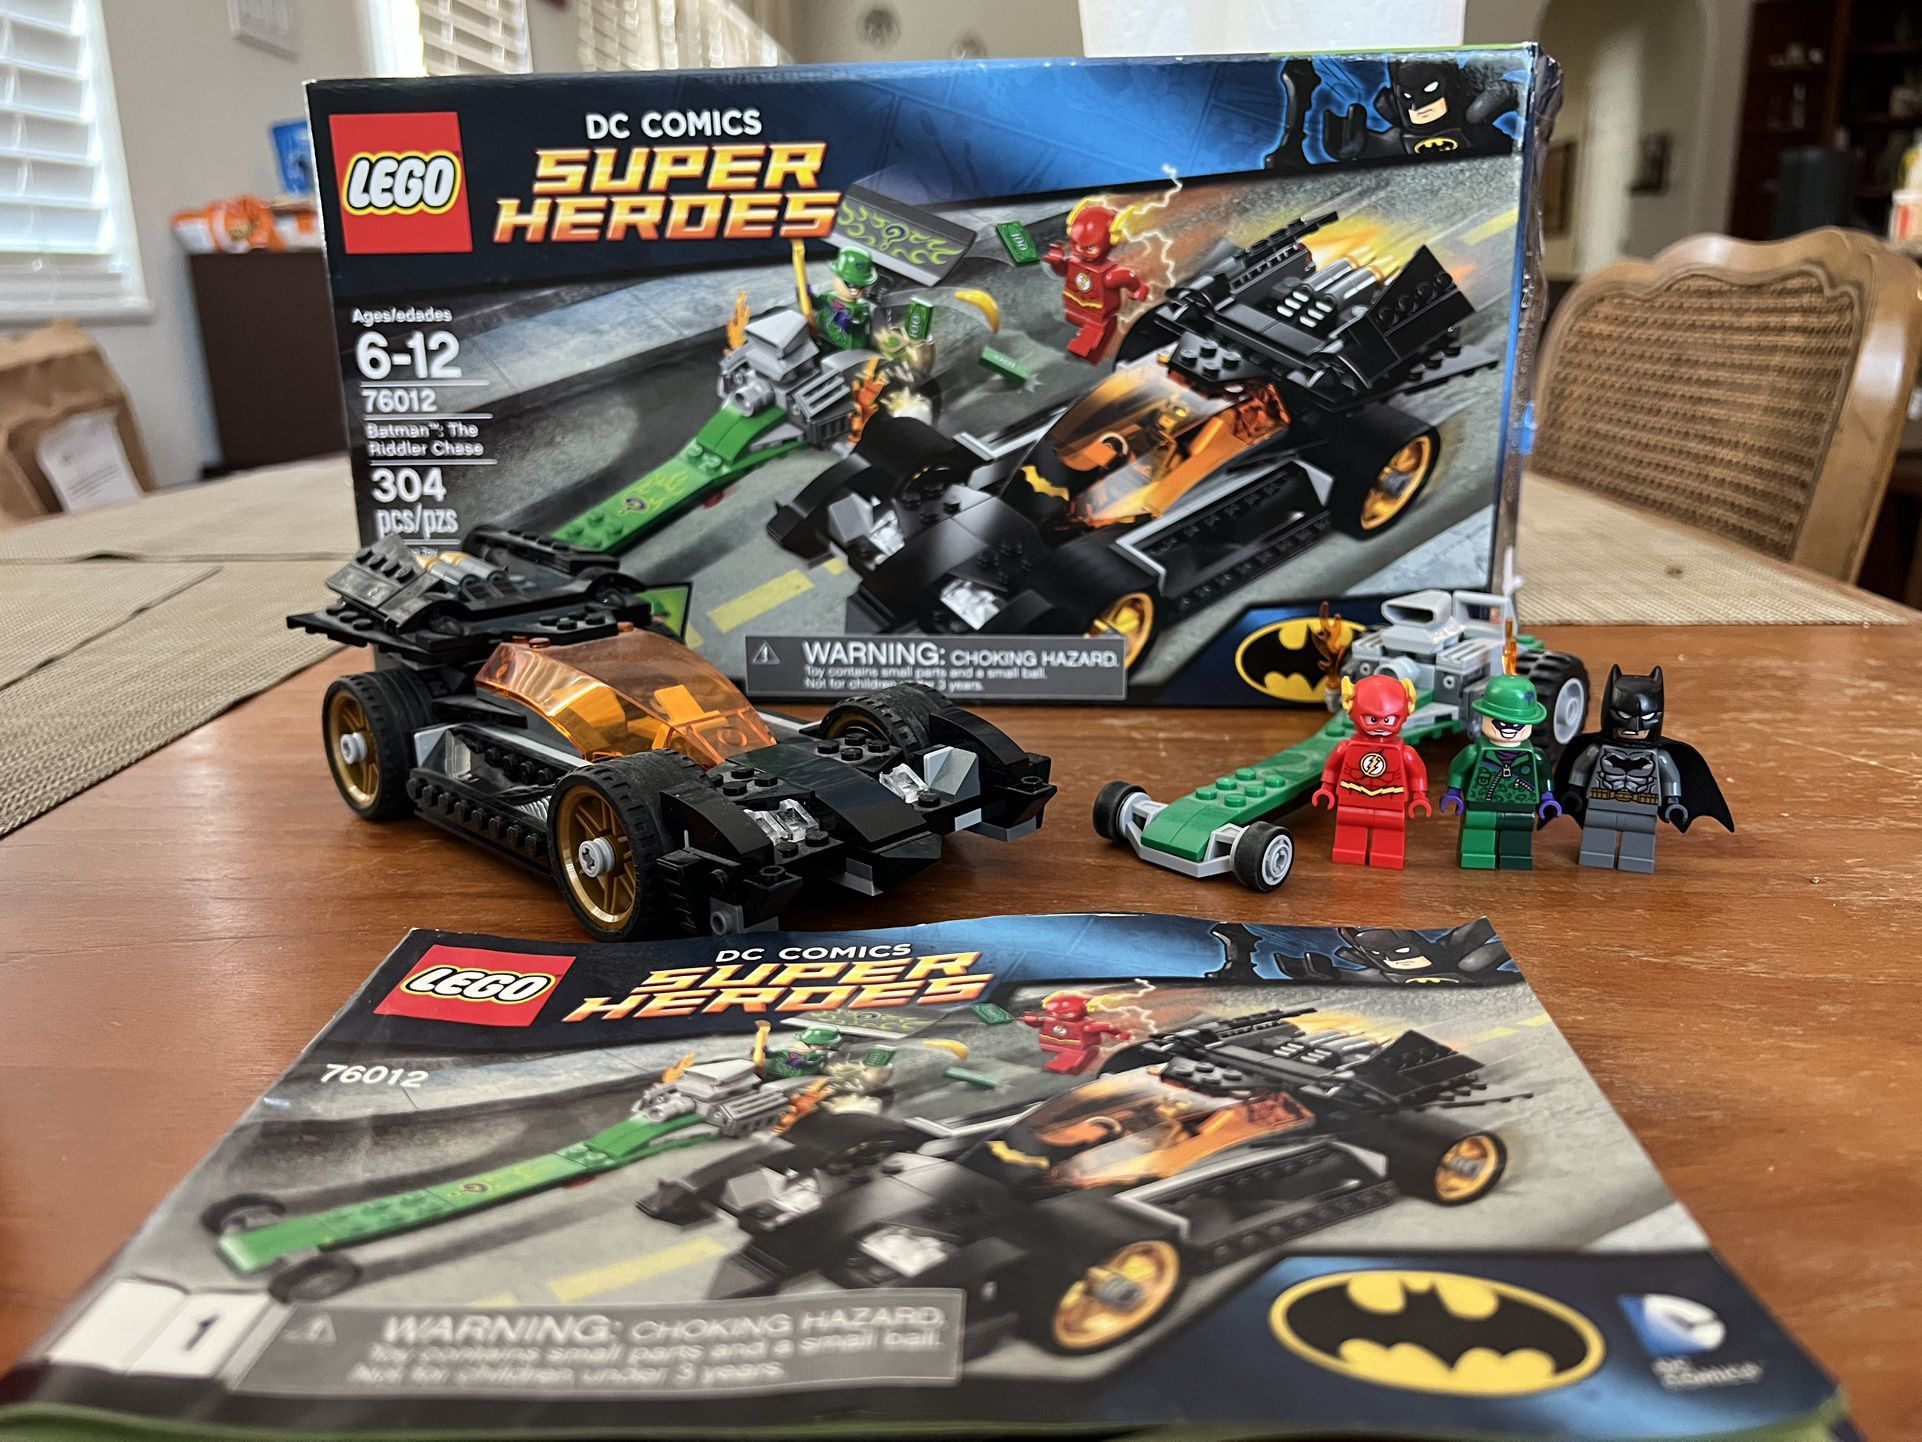  LEGO Superheroes 76012 Batman: The Riddler Chase : Toys & Games